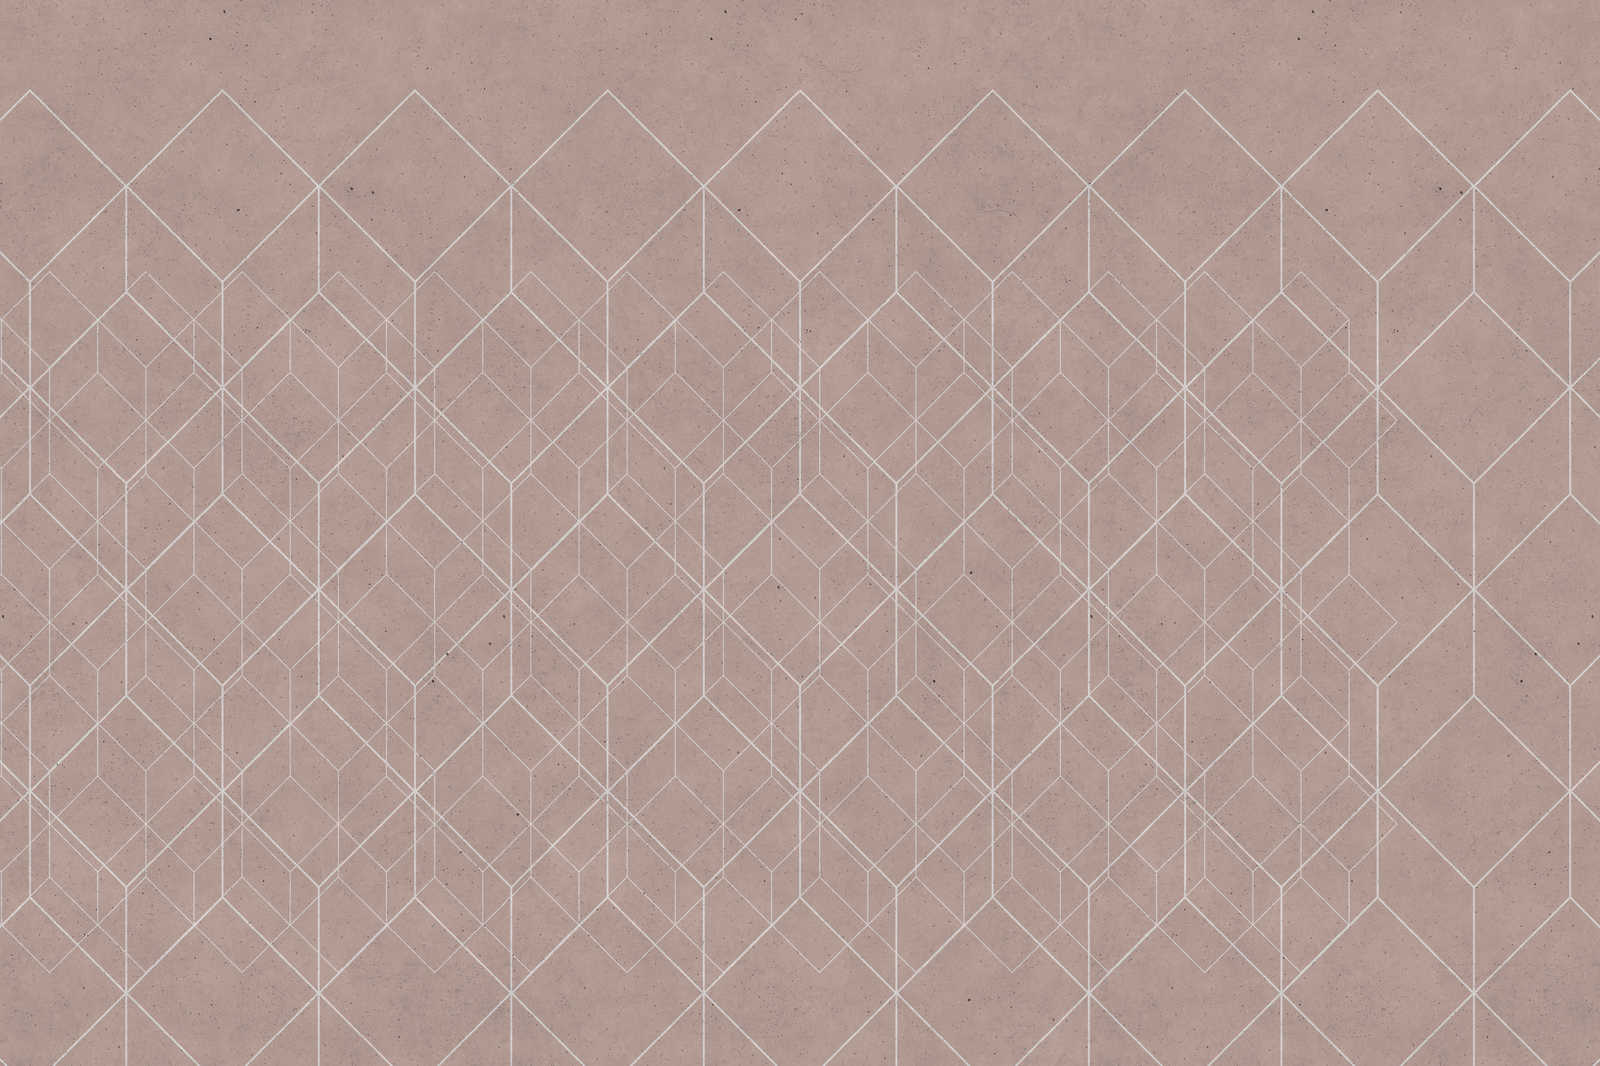             Canvas painting geometric pattern | beige, white - 1.20 m x 0.80 m
        